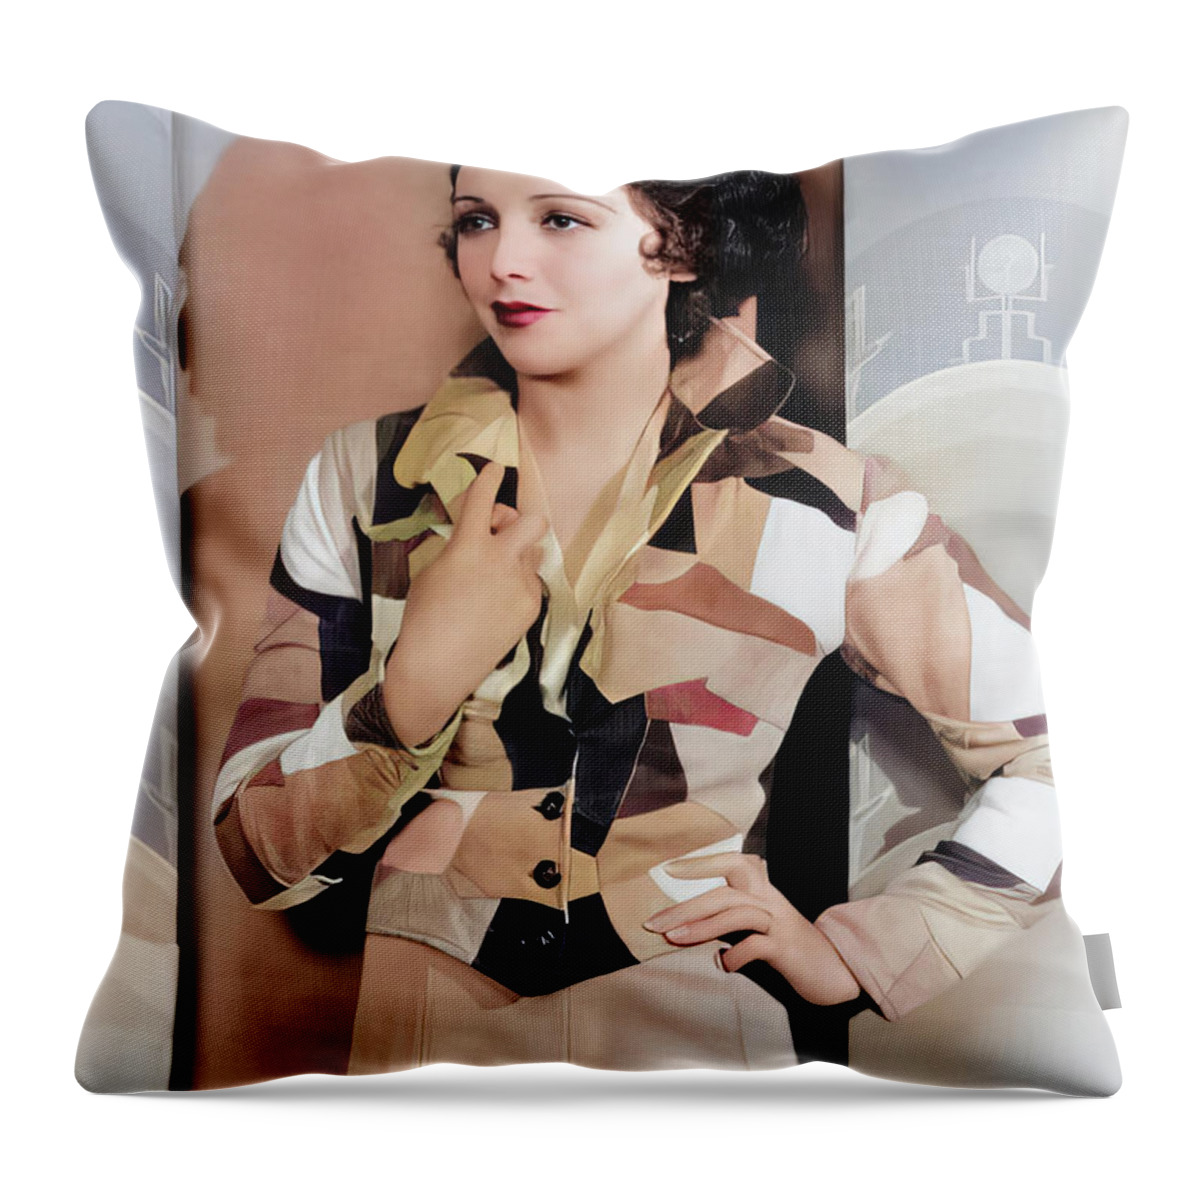 Bebe Daniels Throw Pillow featuring the digital art Bebe Daniels - Actress by Chuck Staley